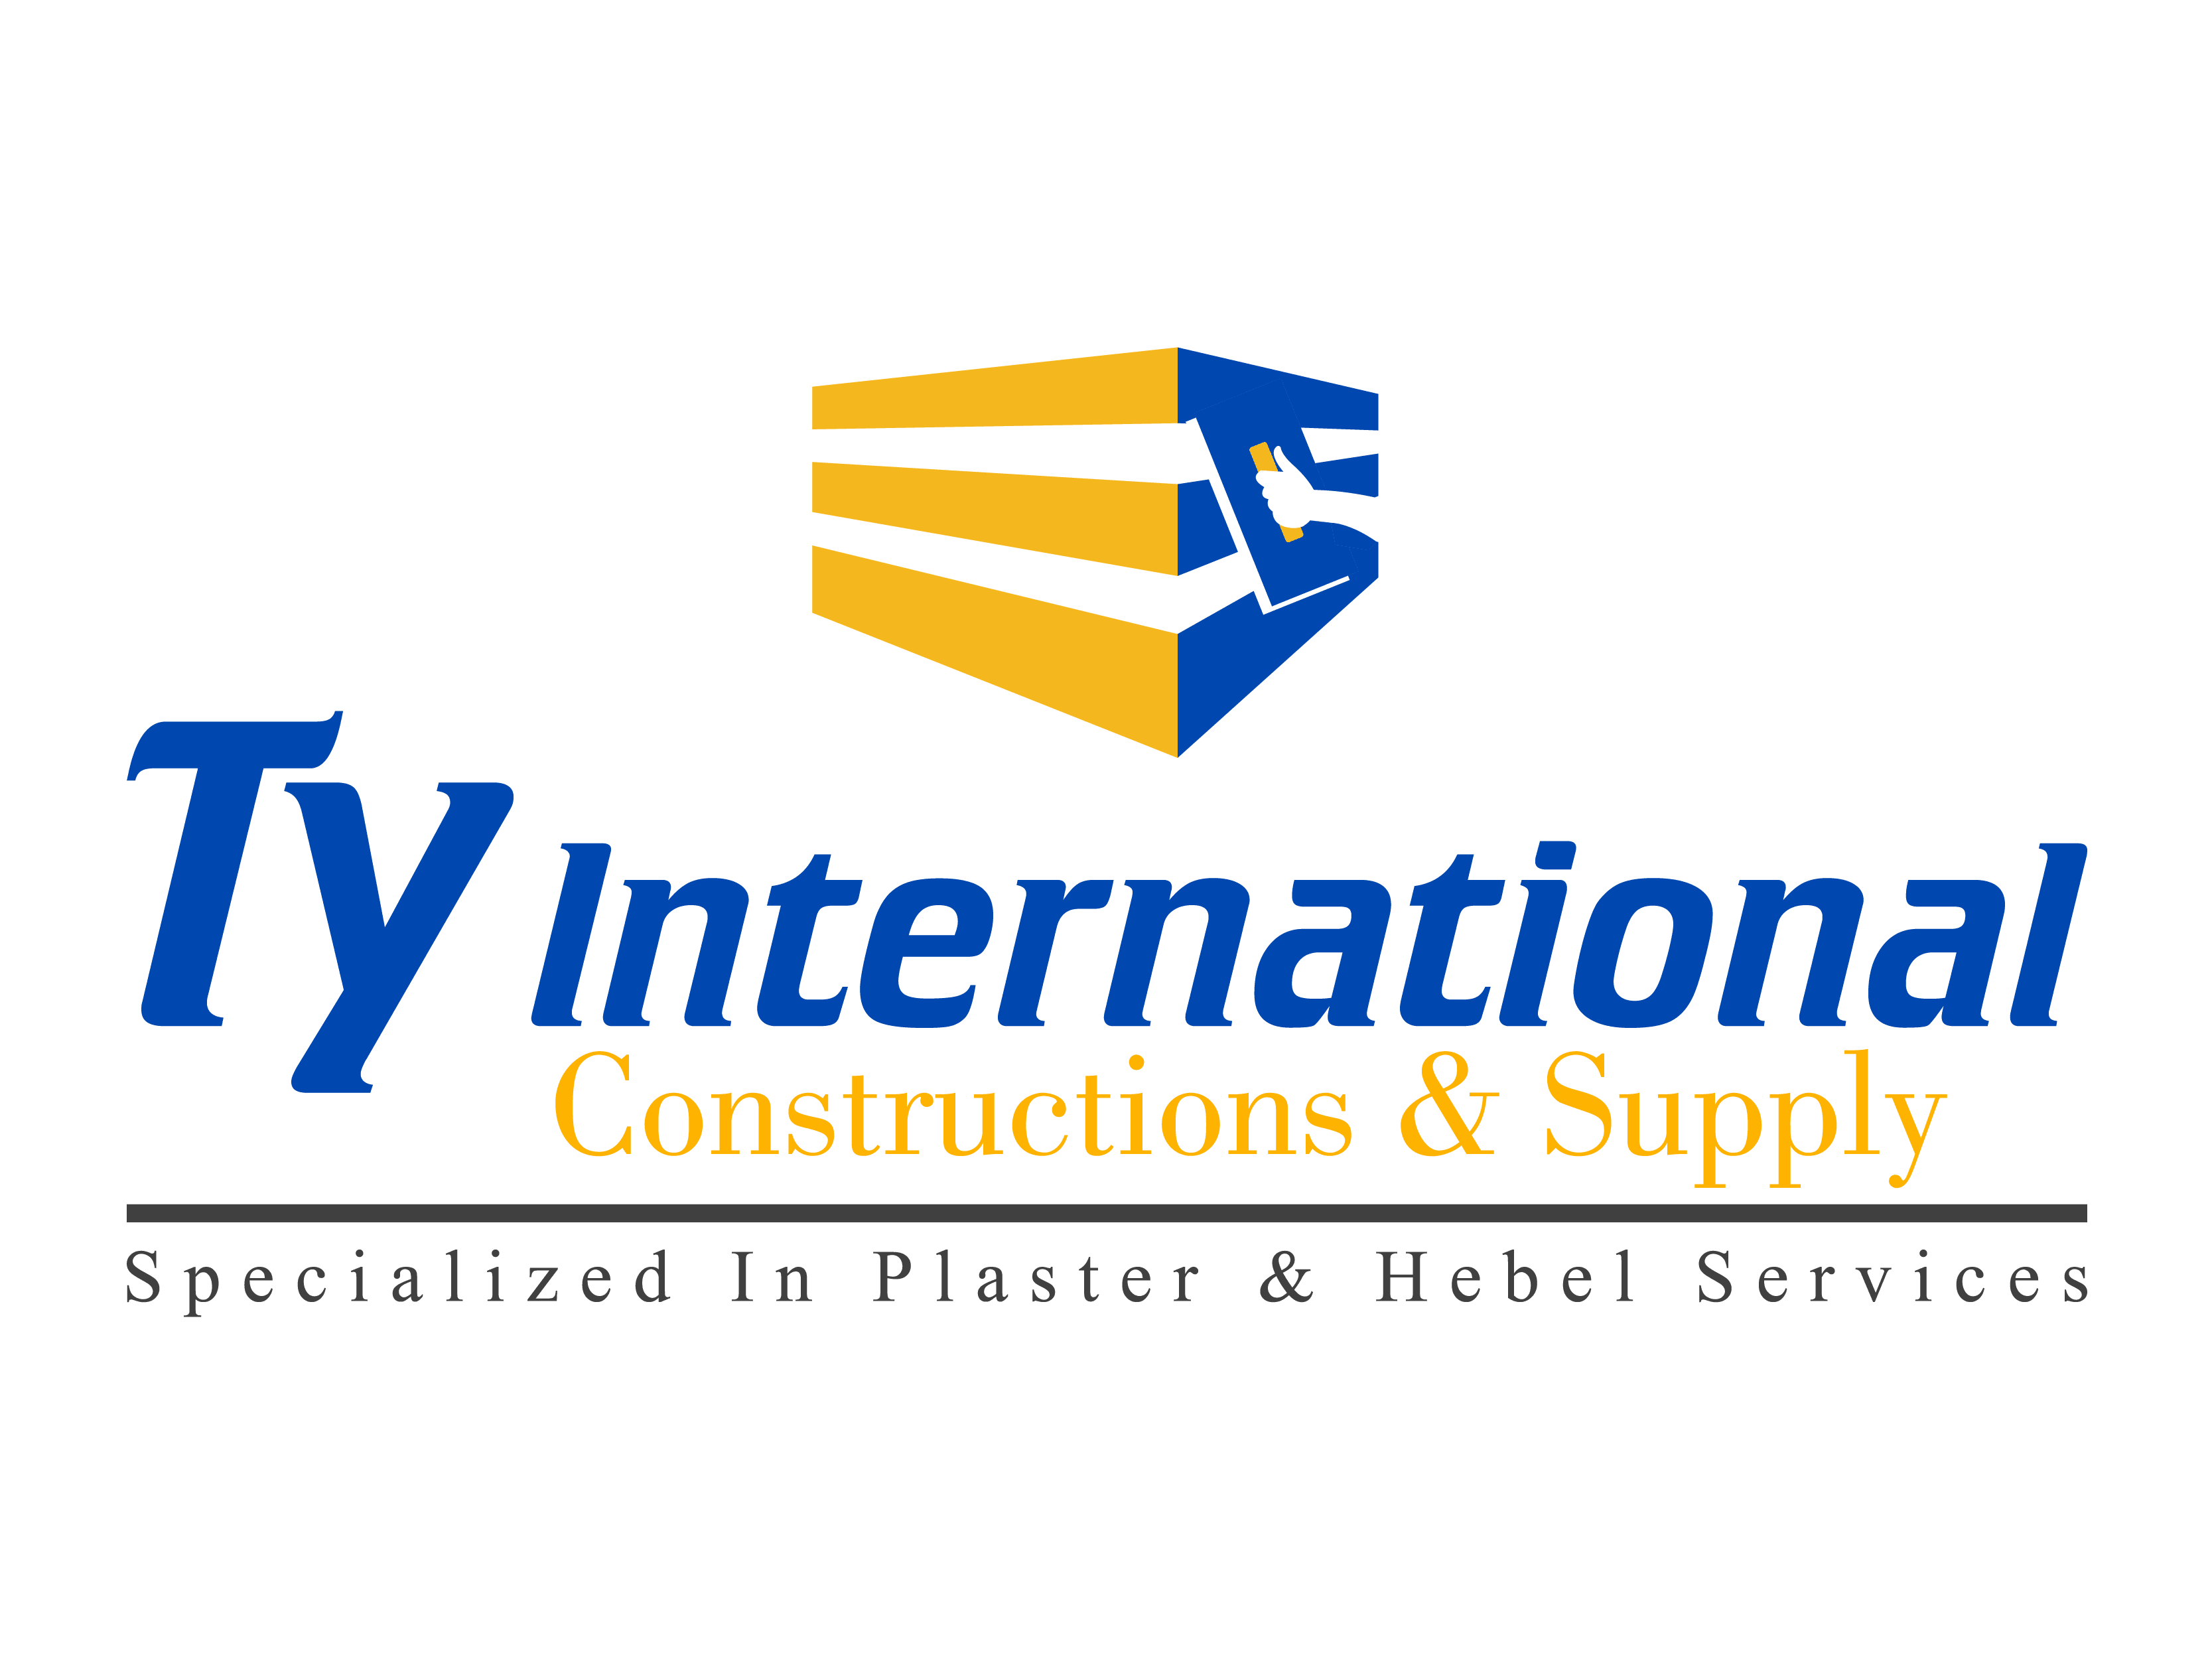 TY International Constructions & Supply